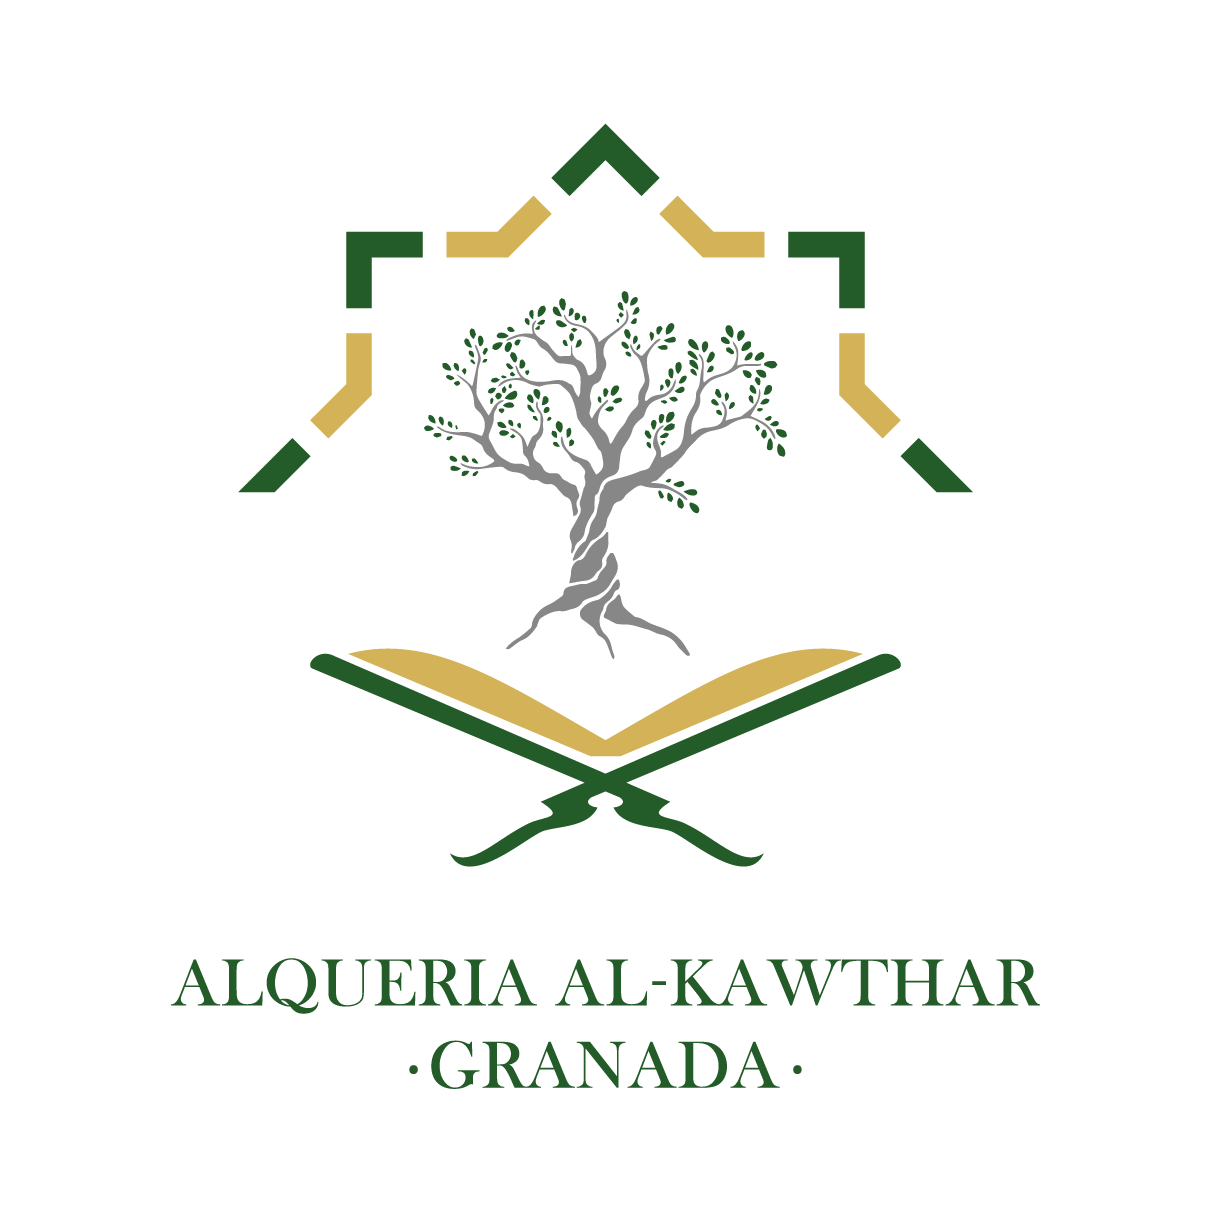 Alqueria Al-Kawthar